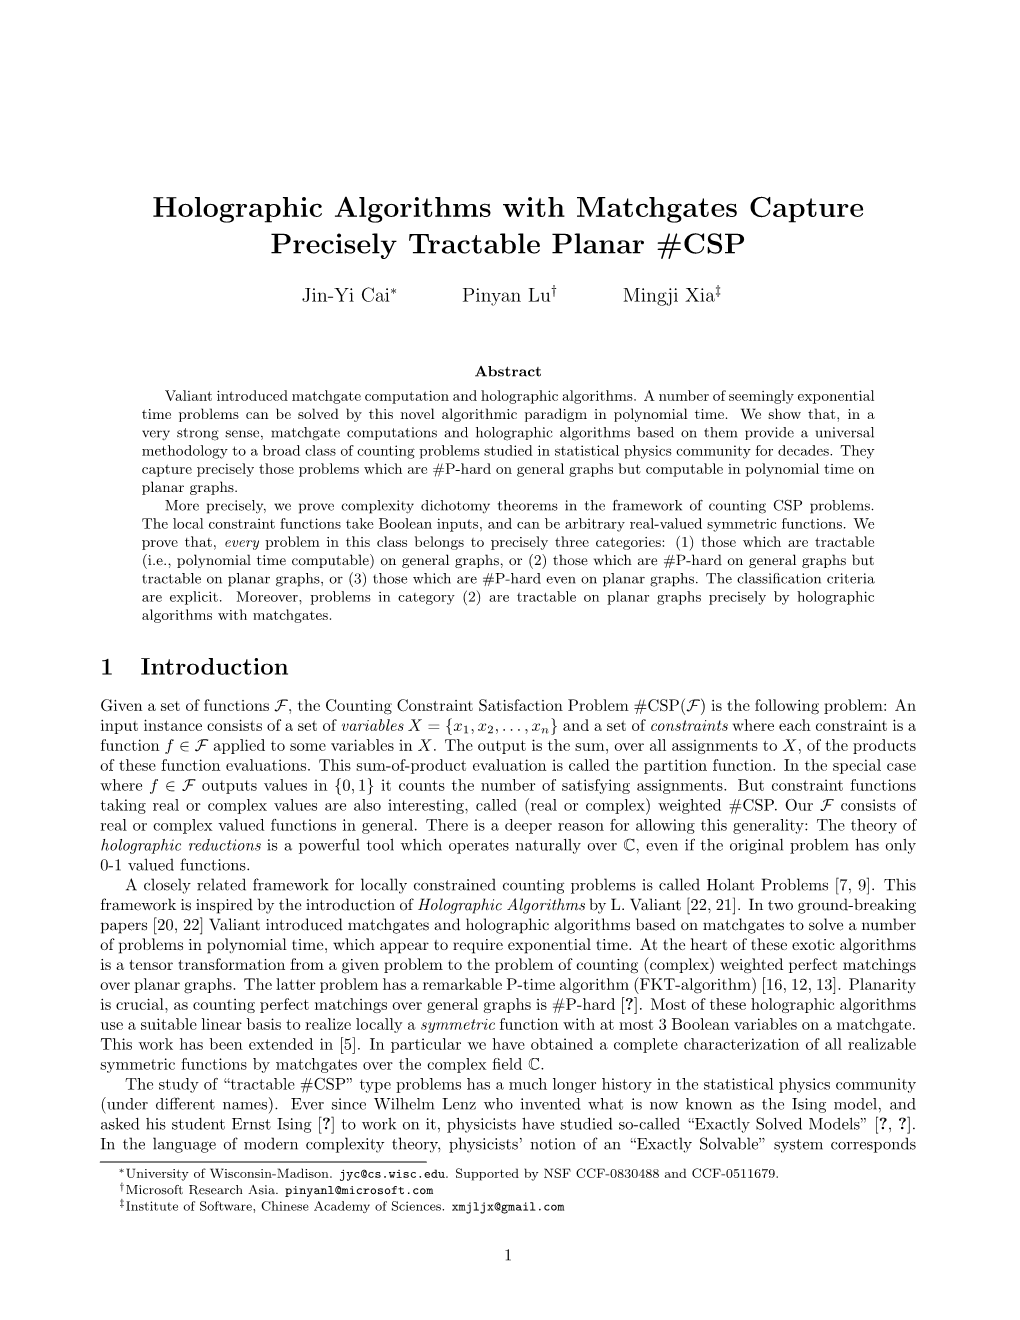 Holographic Algorithms with Matchgates Capture Precisely Tractable Planar #CSP